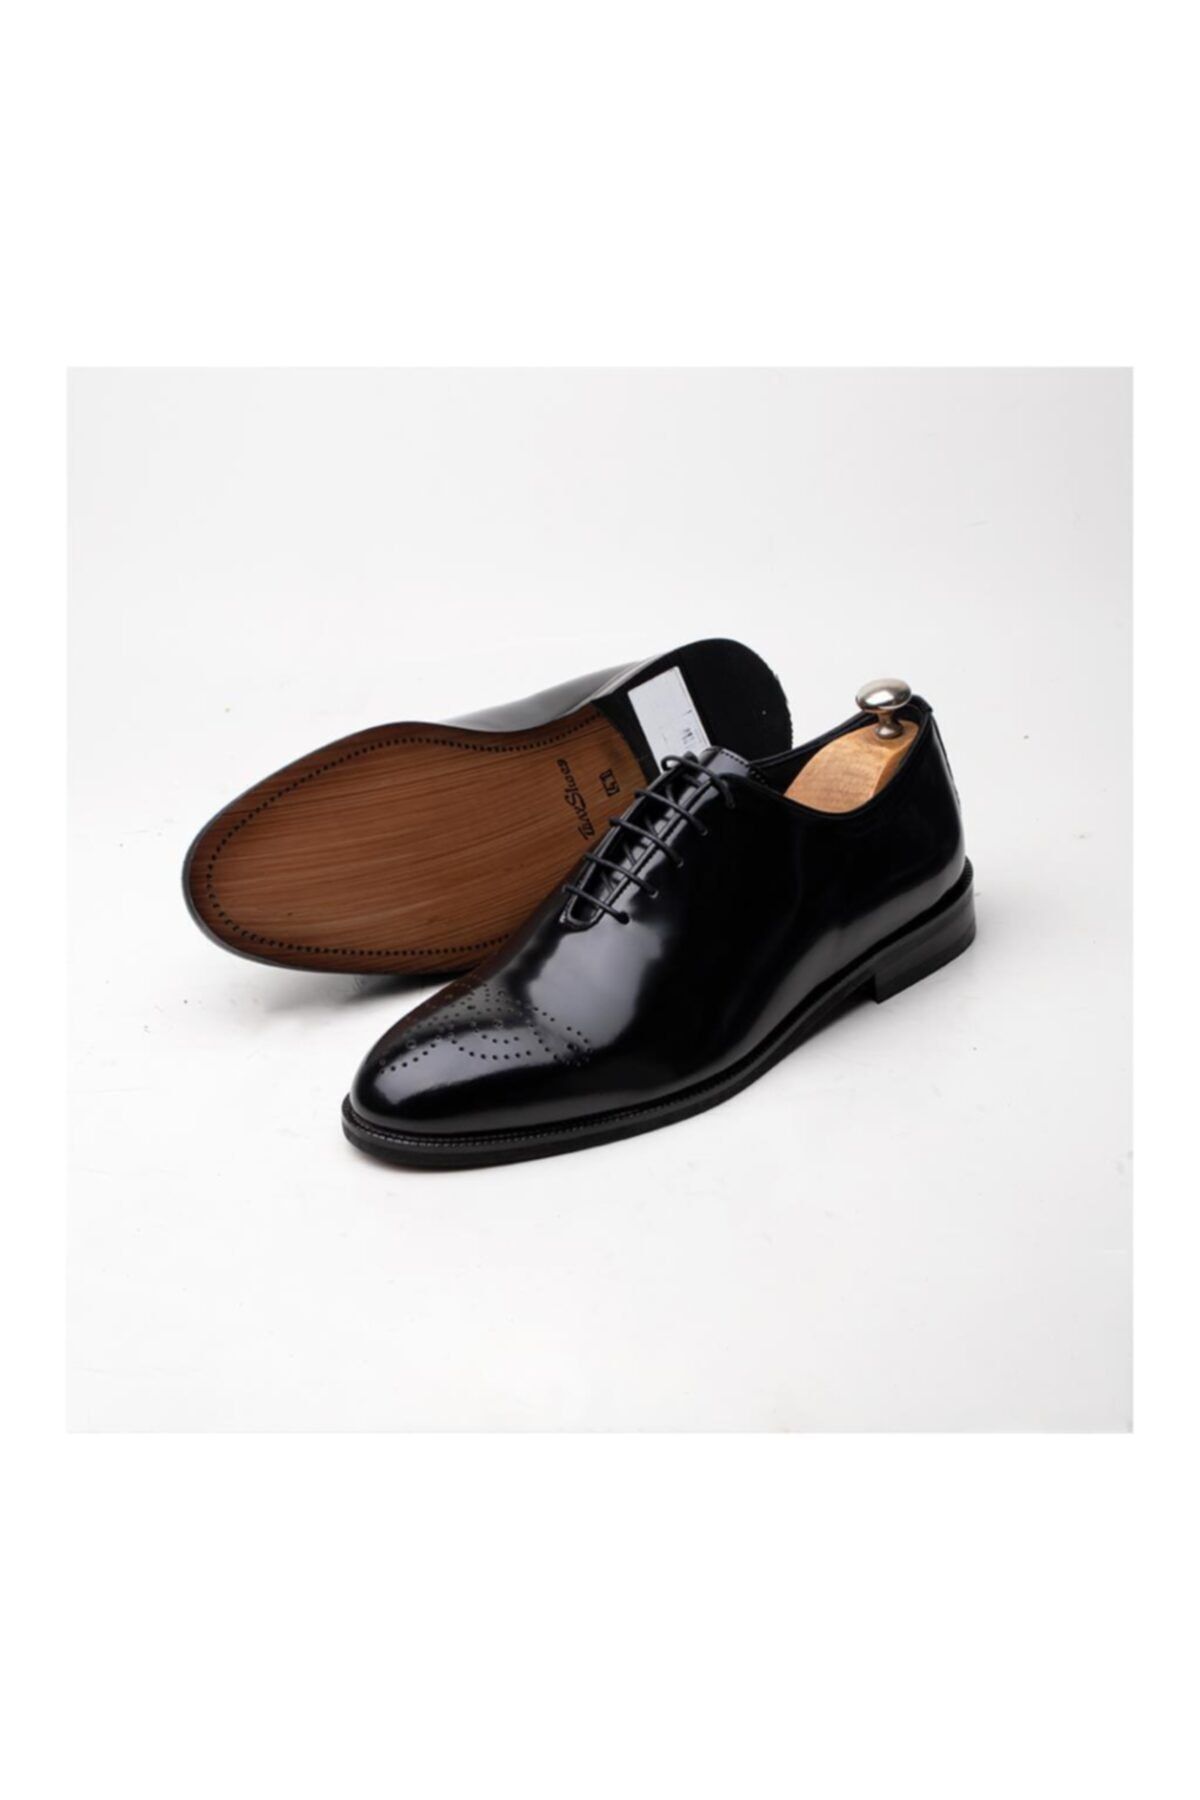 İBAY 5001 Toore Siyah Rugan Hakiki Tarz Erkek Klasik Ayakkabı